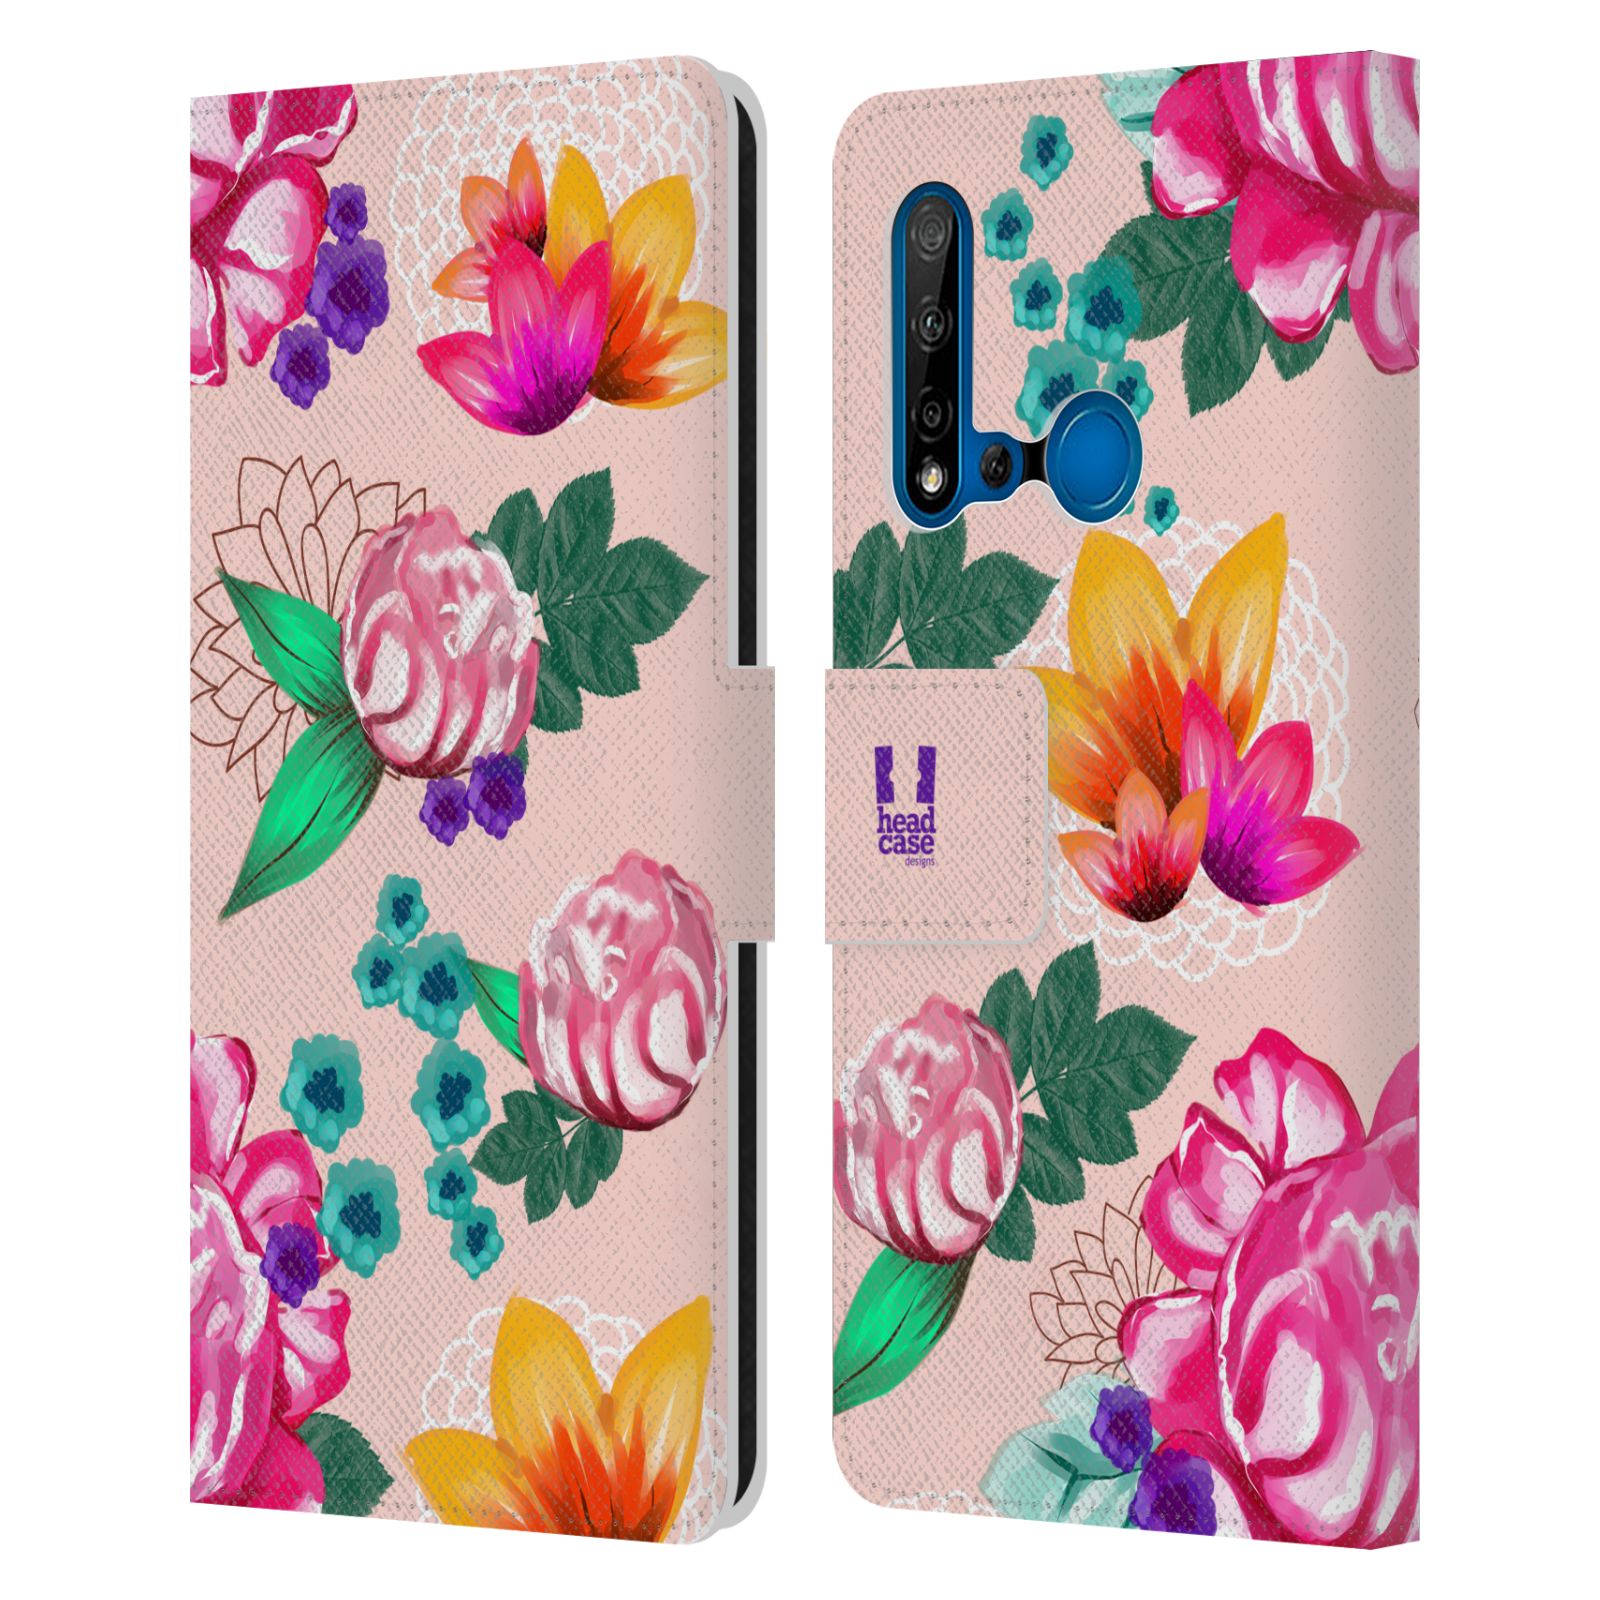 Pouzdro na mobil Huawei P20 LITE 2019 barevné kreslené květiny růžová